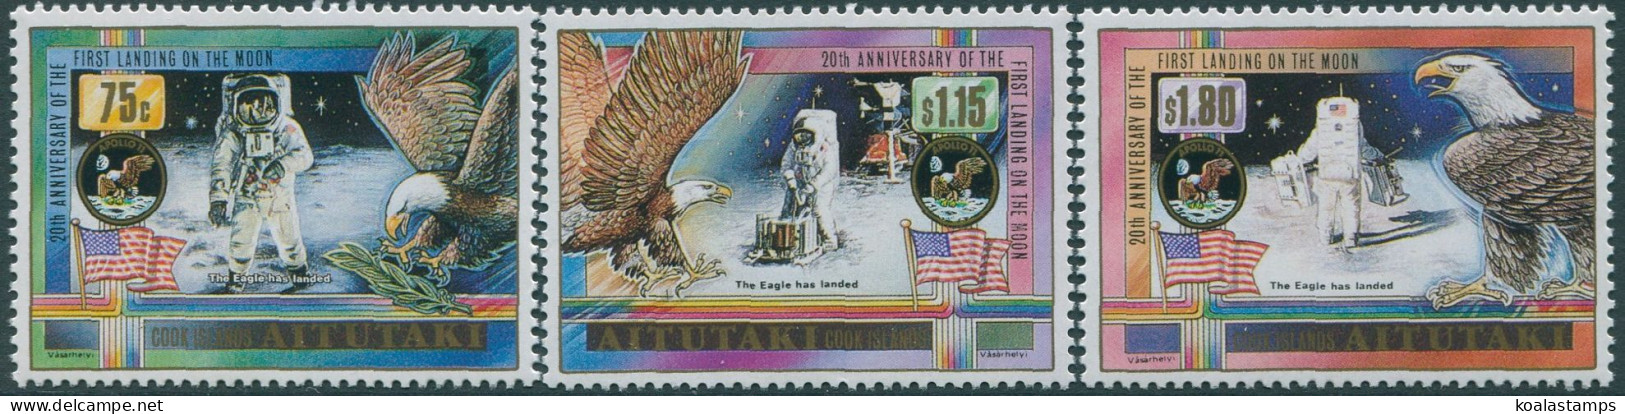 Aitutaki 1989 SG602-604 Moonlanding Set MNH - Cook Islands